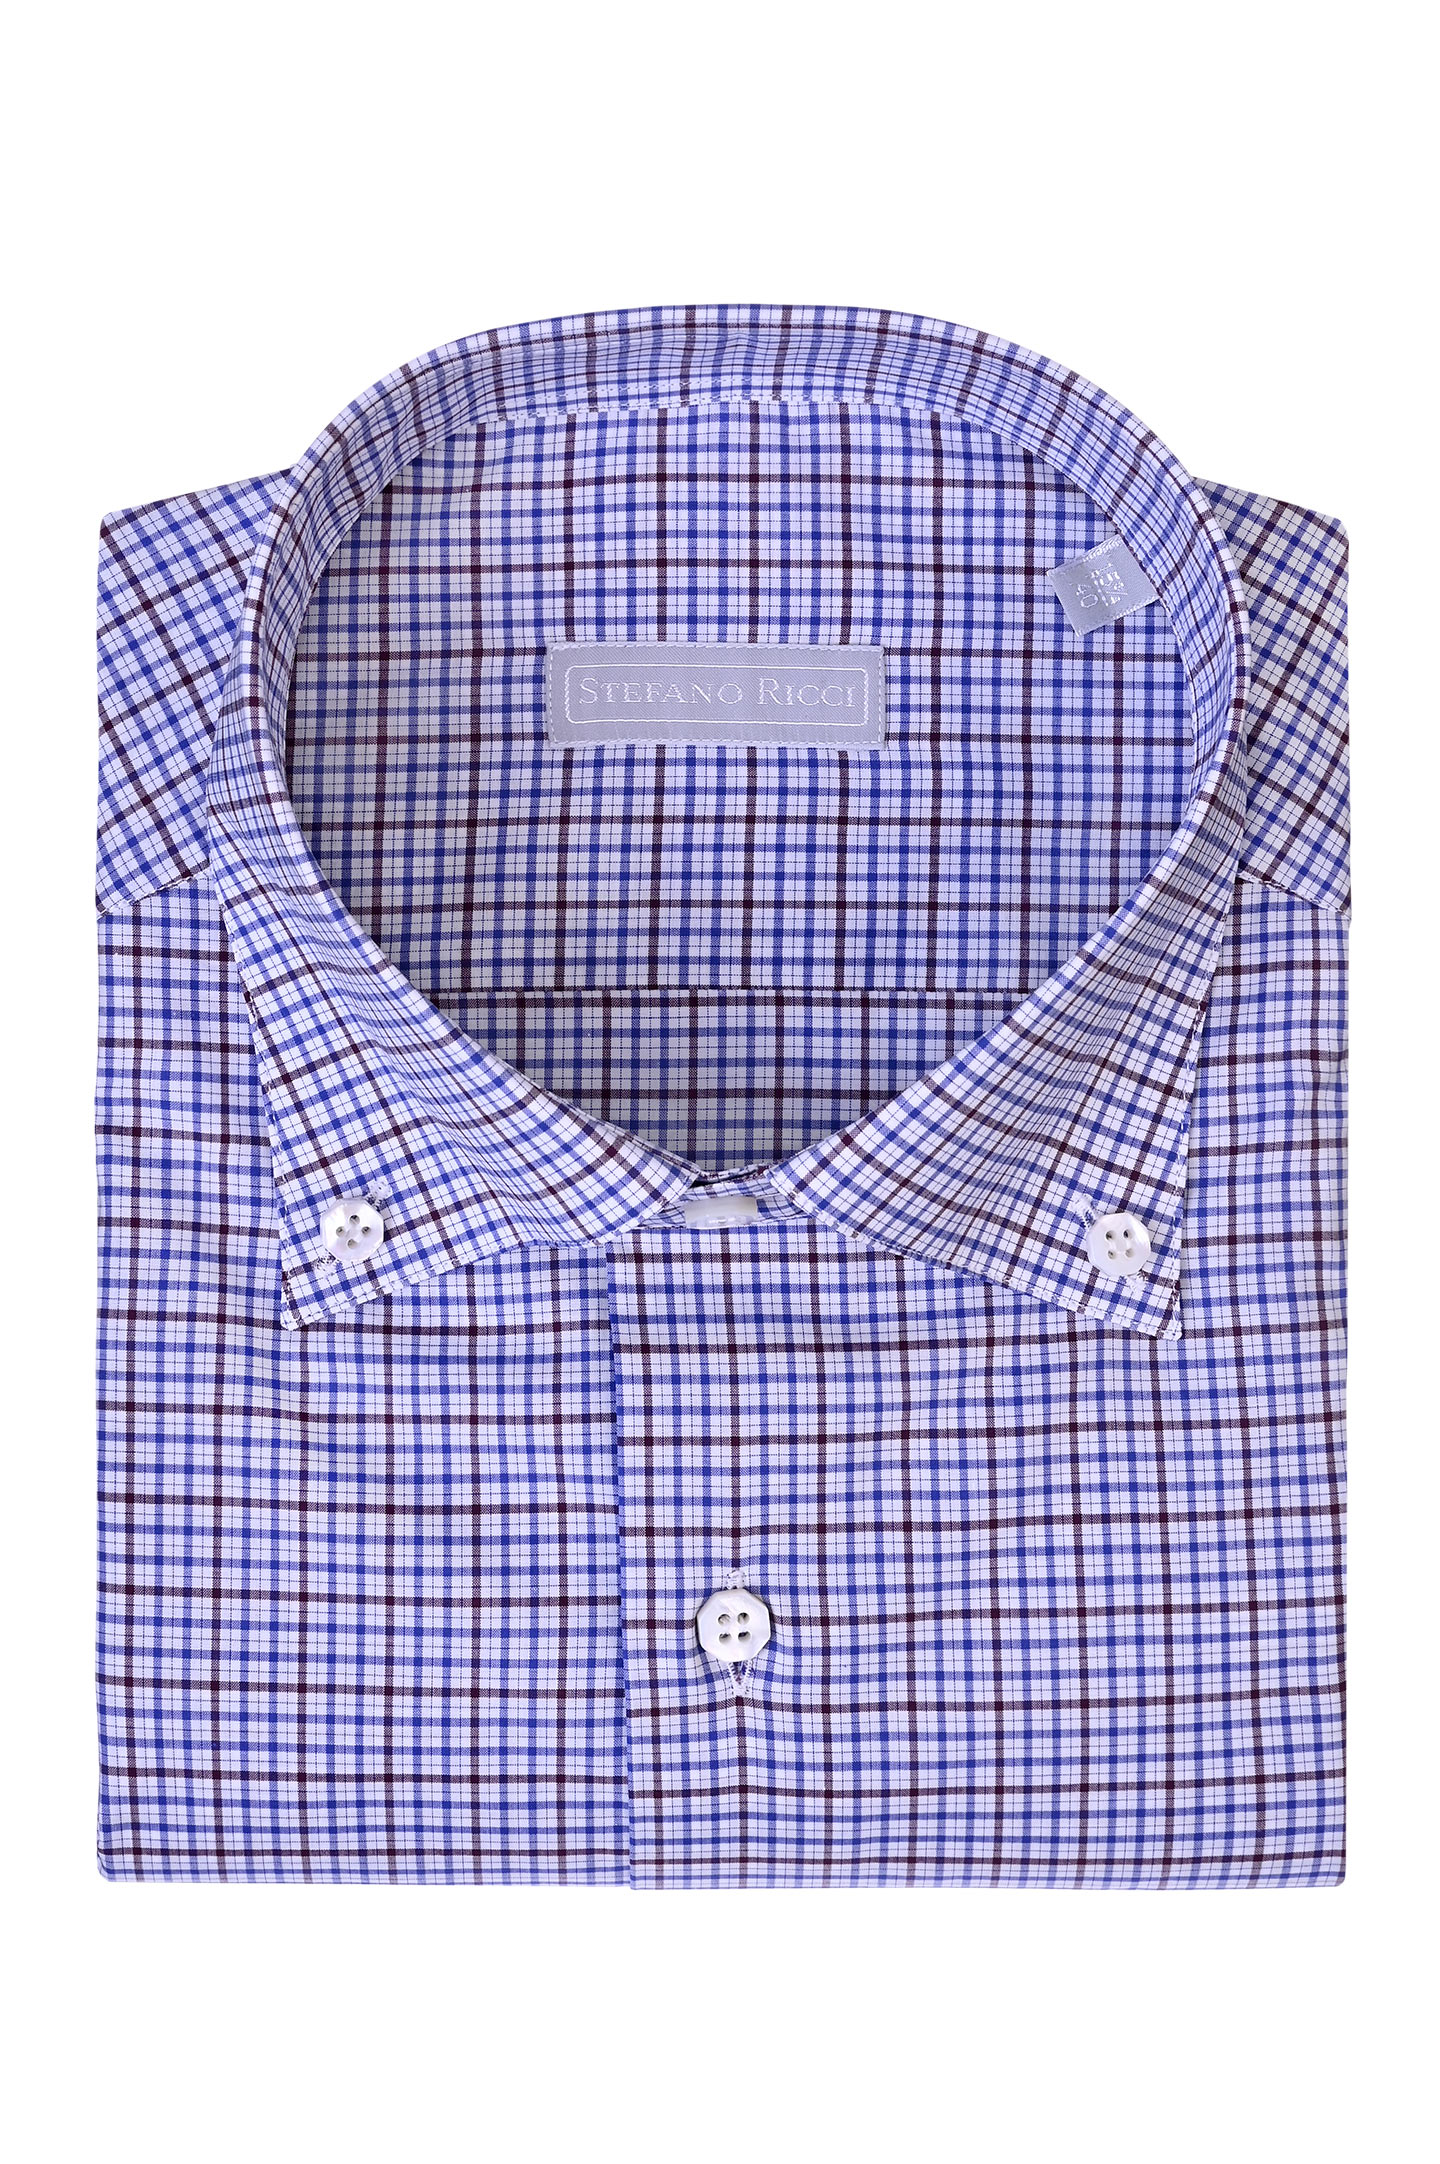 Рубашка STEFANO RICCI MC003700 L2212, цвет: Синий, Мужской